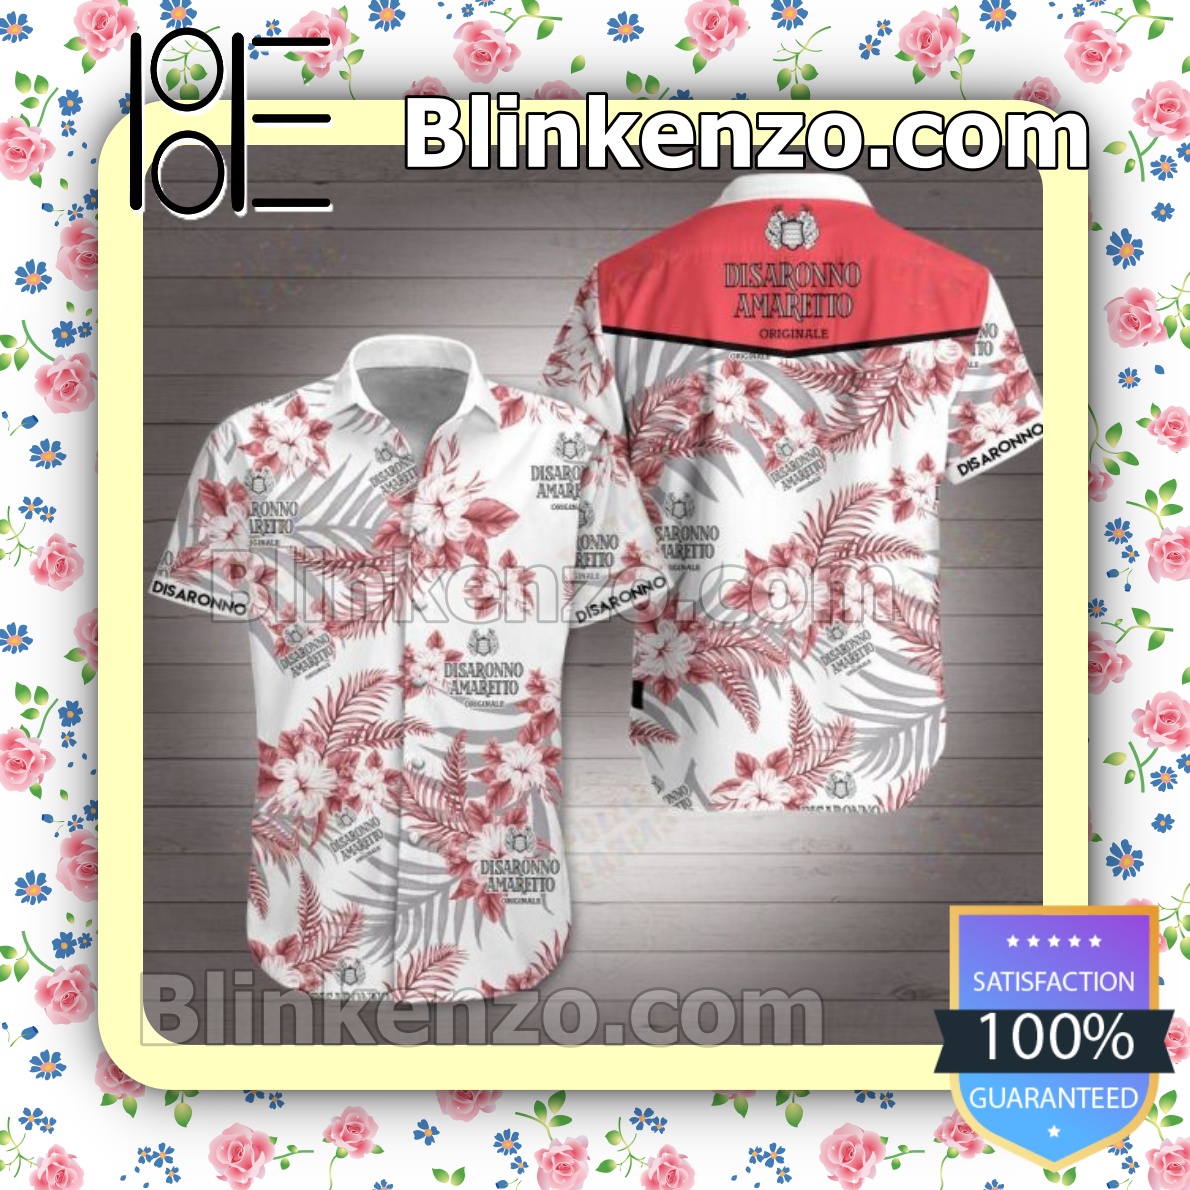 Fantastic Disaronno Amaretto Originale Red Tropical Floral White Summer Shirts